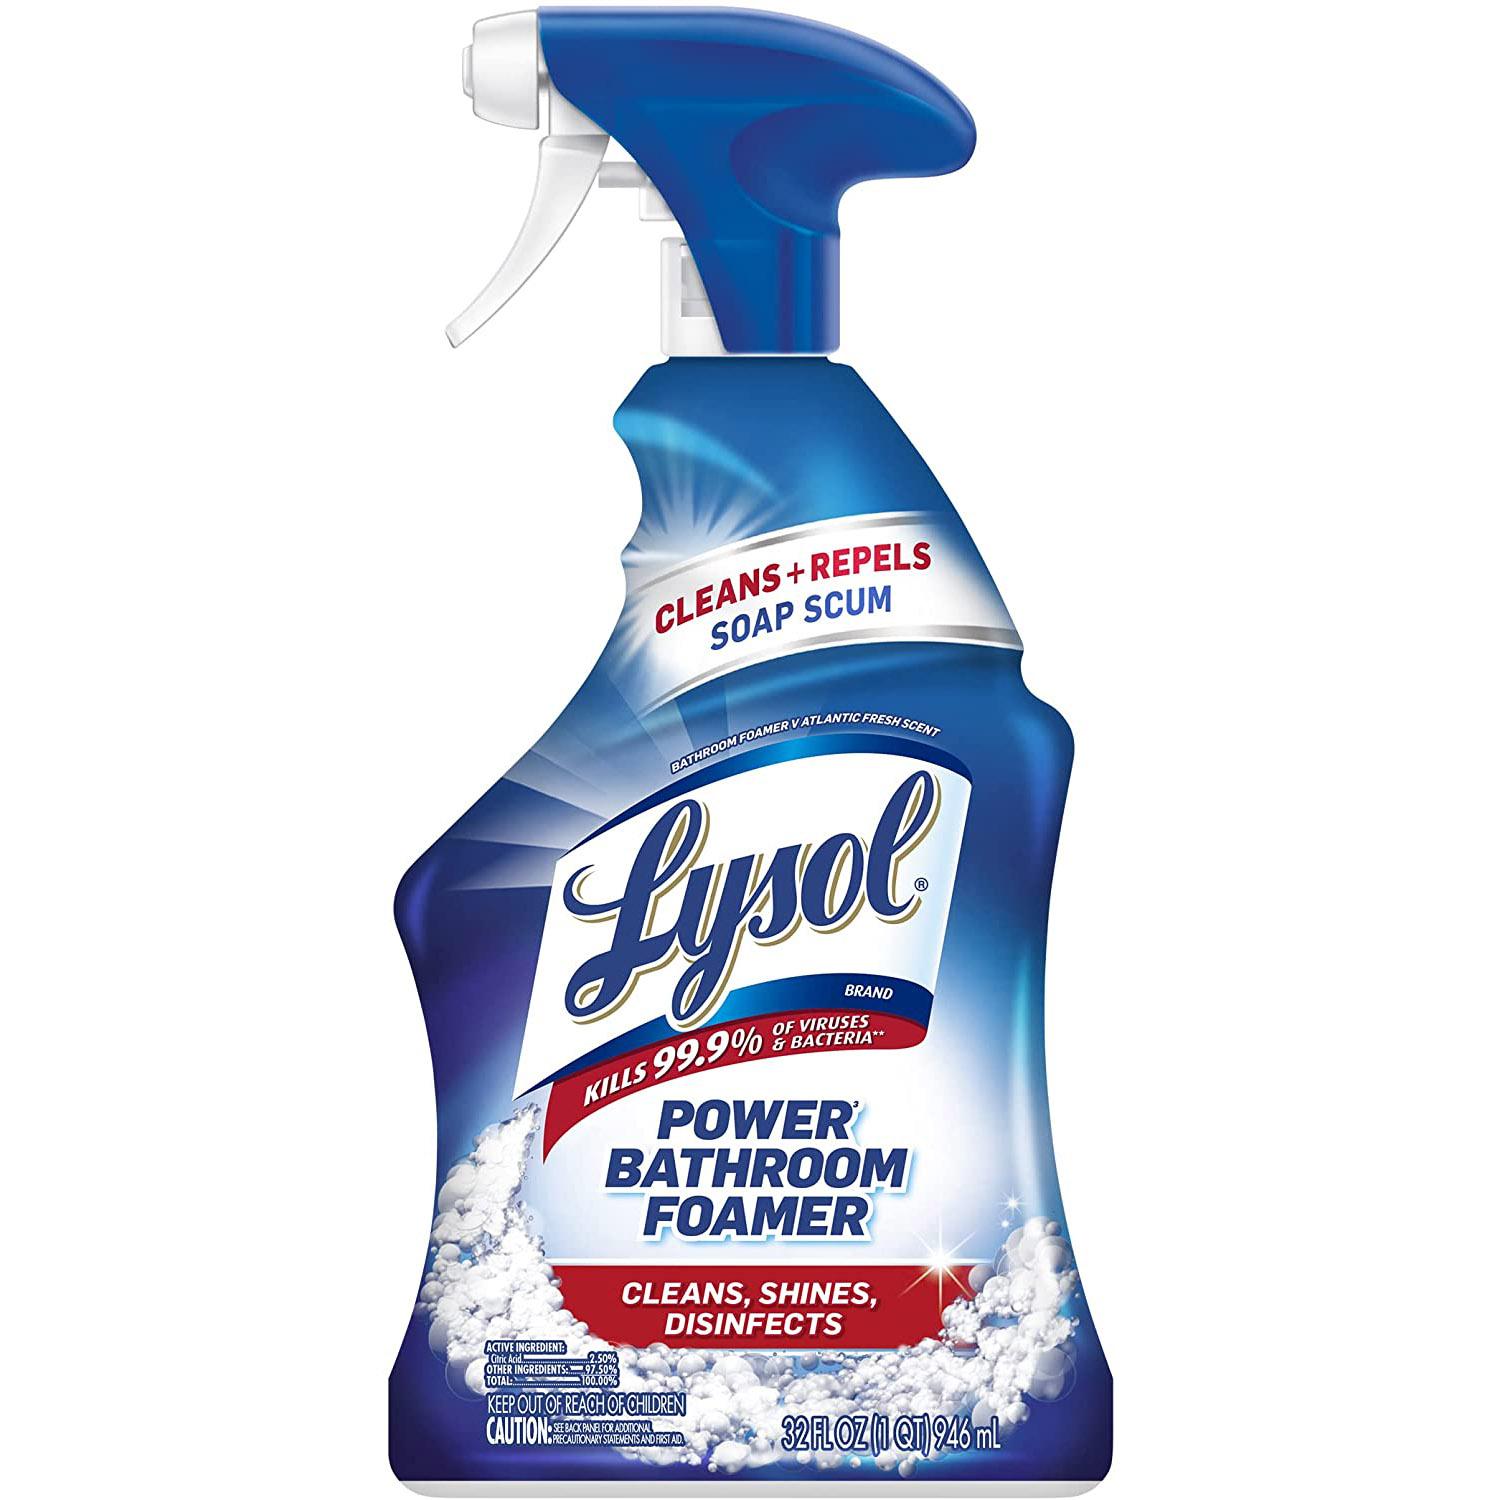 Lysol Power Bathroom Island Breeze Foamer Cleaning Spray for $2.34 Shipped